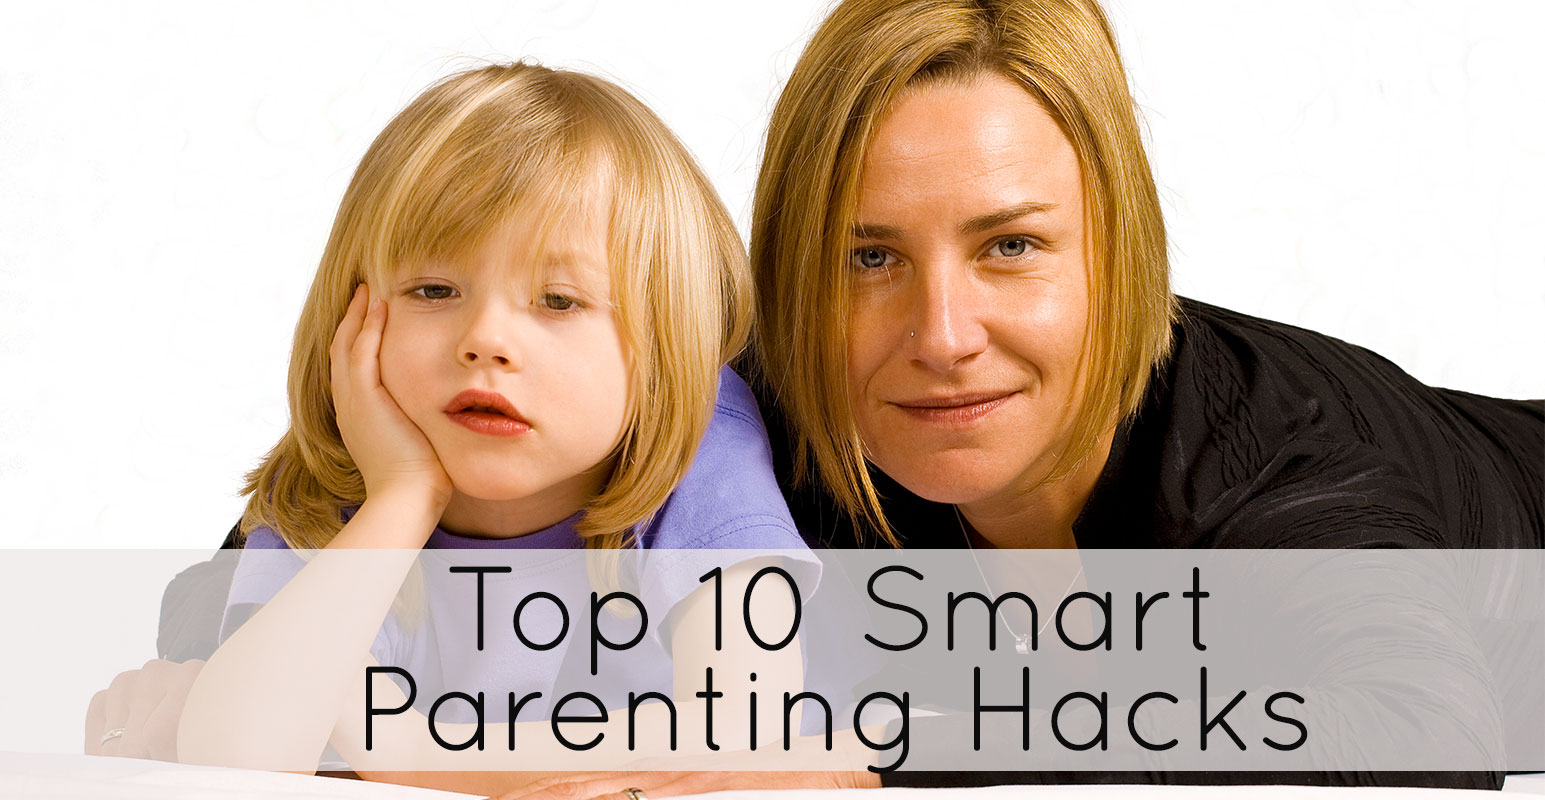 Top 10 Smart Parenting Hacks